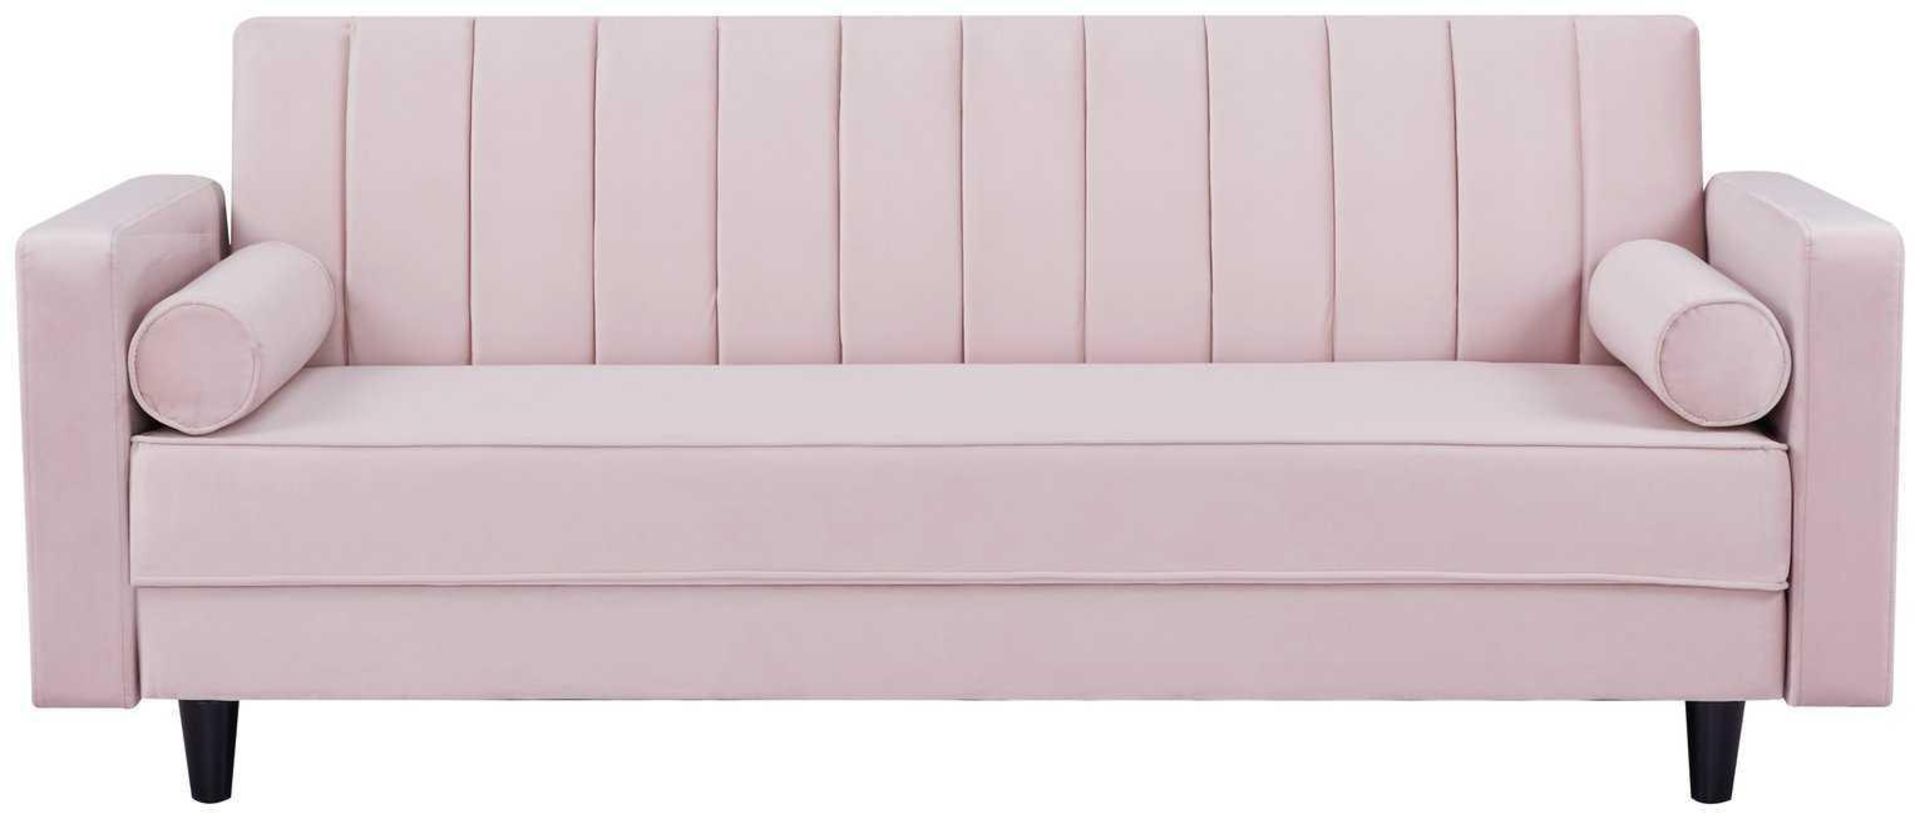 (Dd) RRP £500 Lot To Contain 1 Habitat Preston Clic Clac Velvet Sofa Bed - Pink